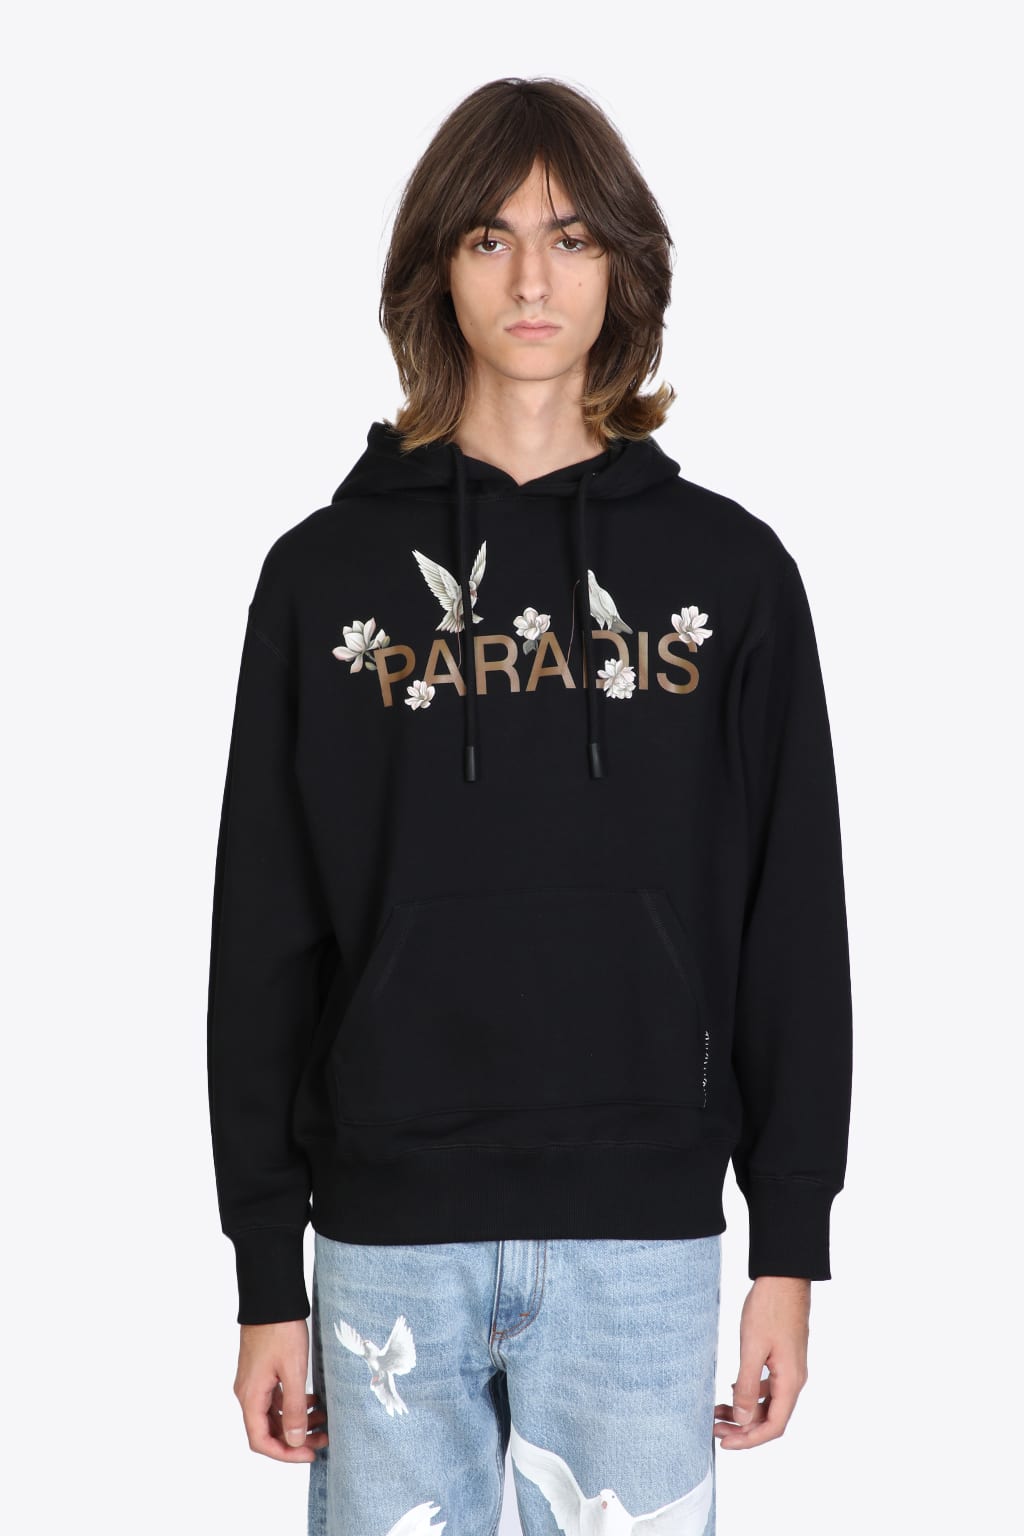 3.Paradis Paradis Hooded Sweater Black hoodie with front logo print - Paradis hooded sweater